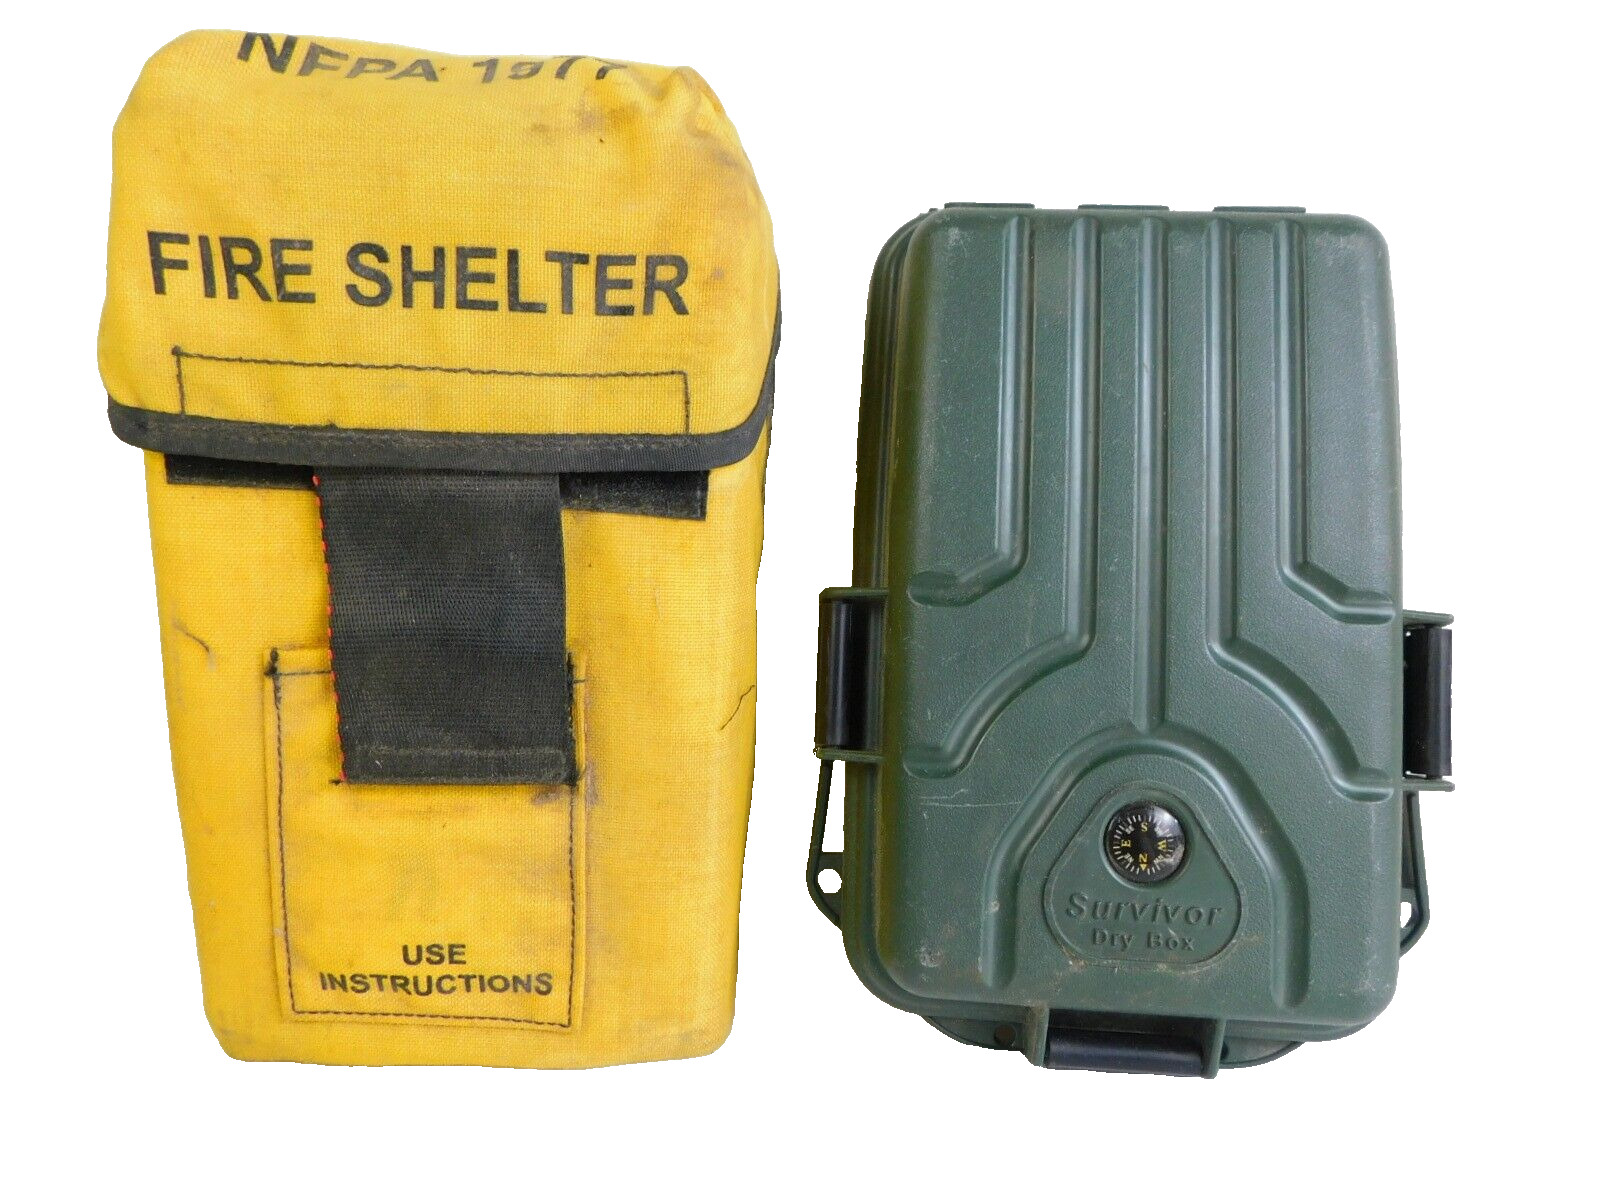 2LOT 1998 Never Deployed Line Gear FSS Wildland Fire Shelter w/ Bag PLUS Dry Box